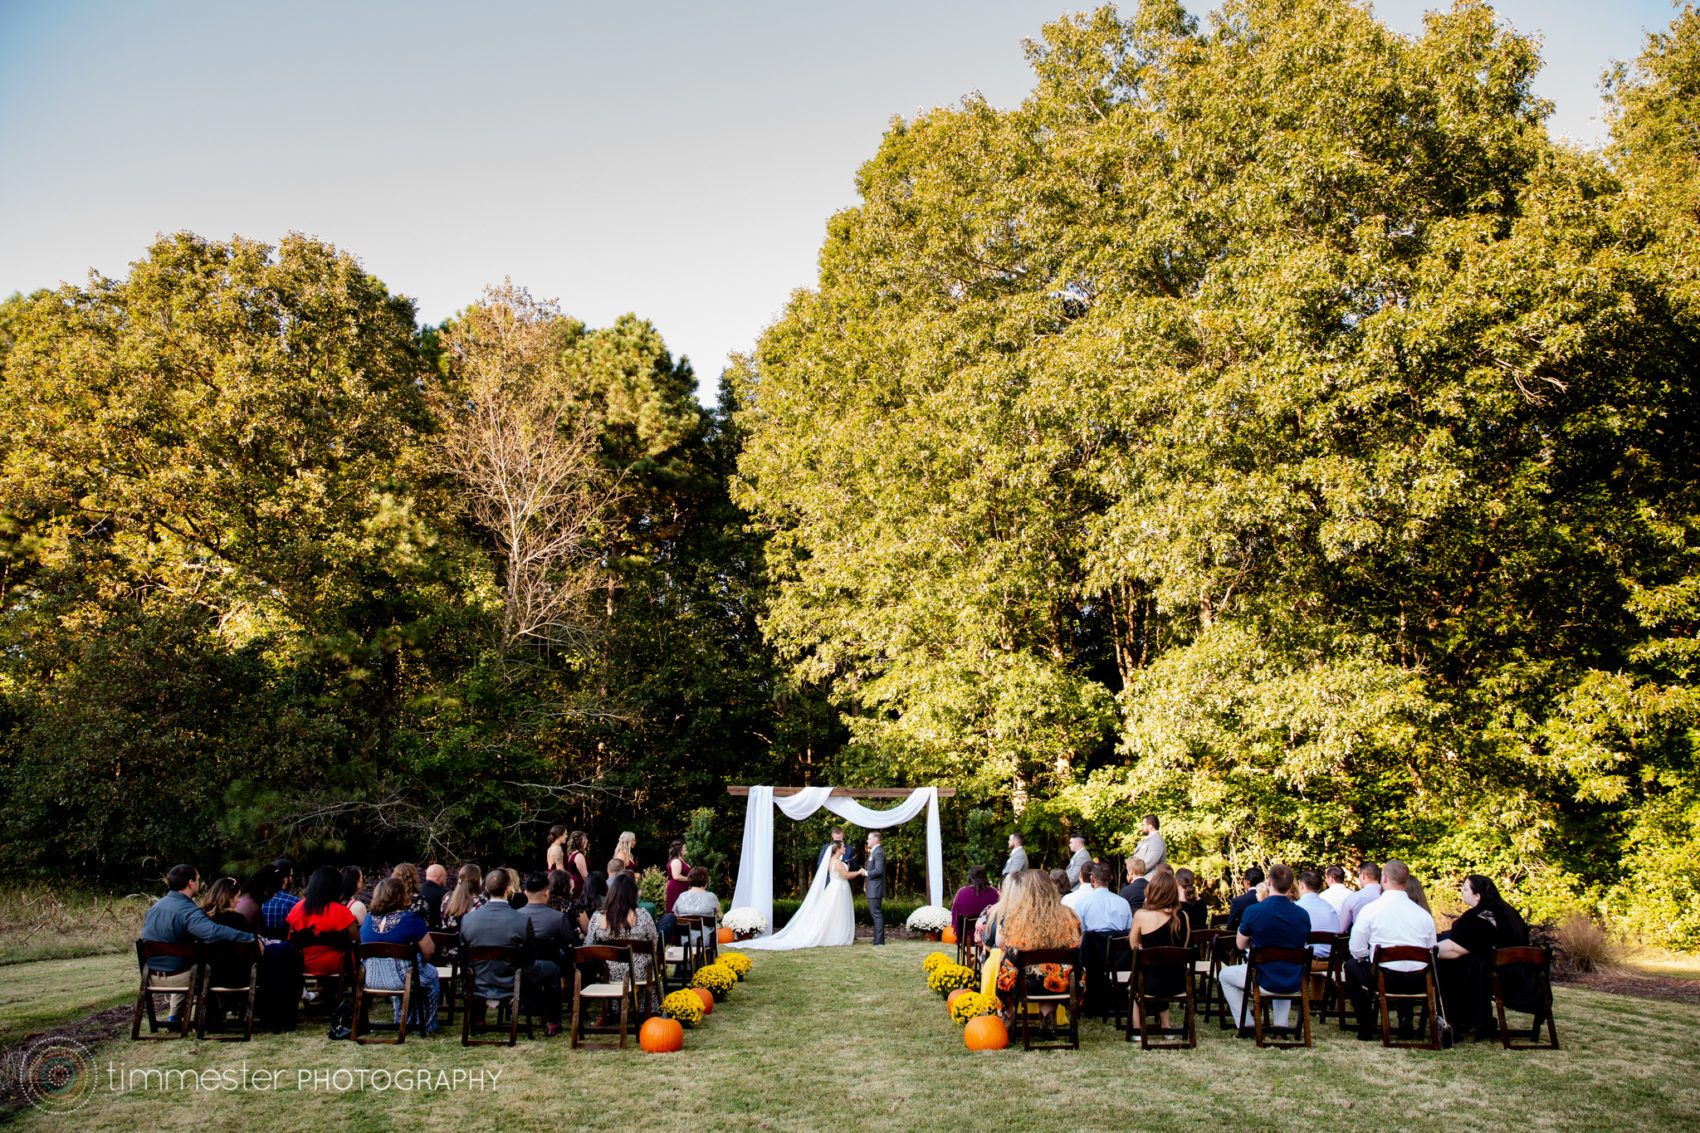 Outdoor wedding ceremony in the fall at Sugarneck venue in North Carolina